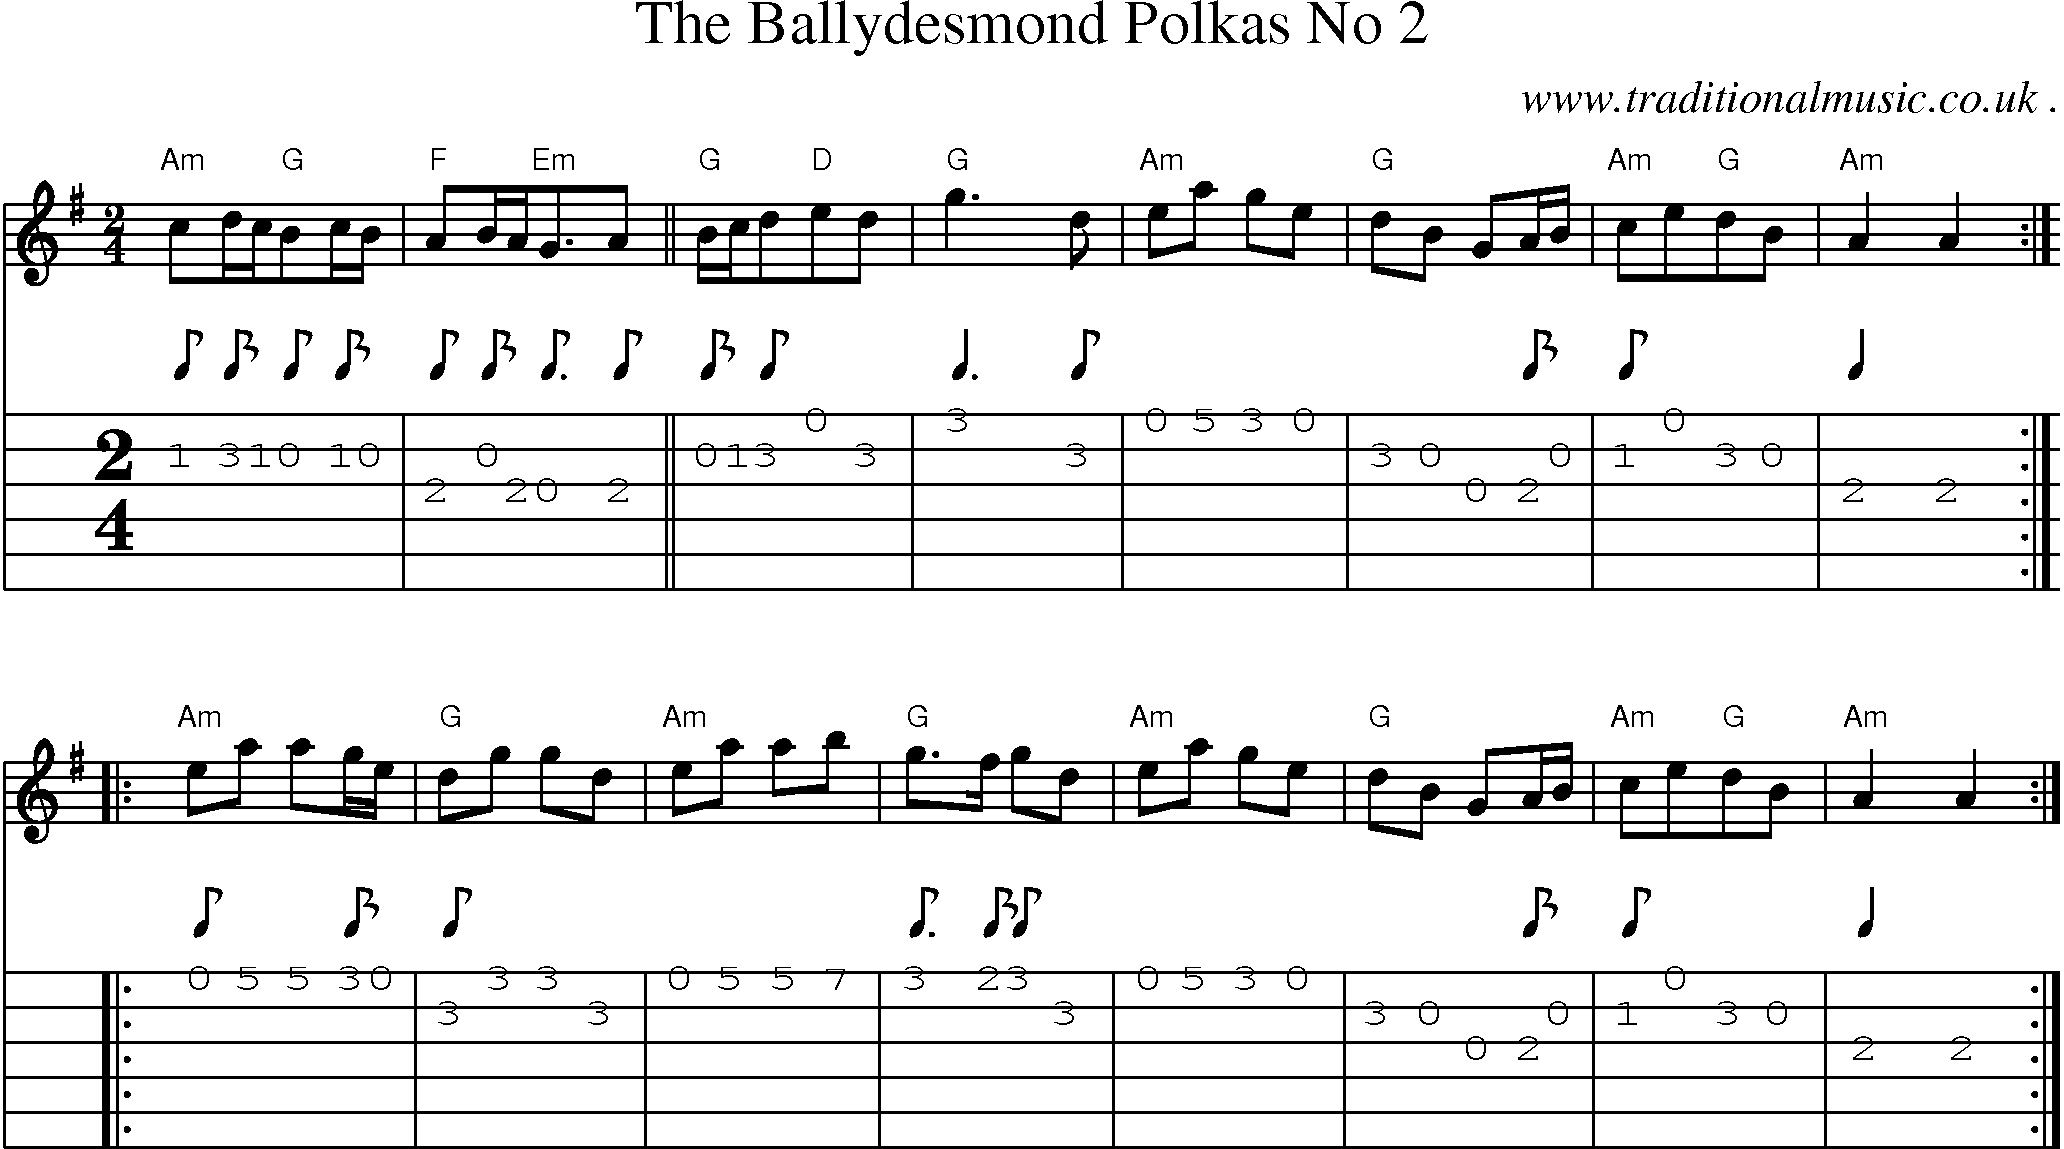 Sheet-Music and Guitar Tabs for The Ballydesmond Polkas No 2